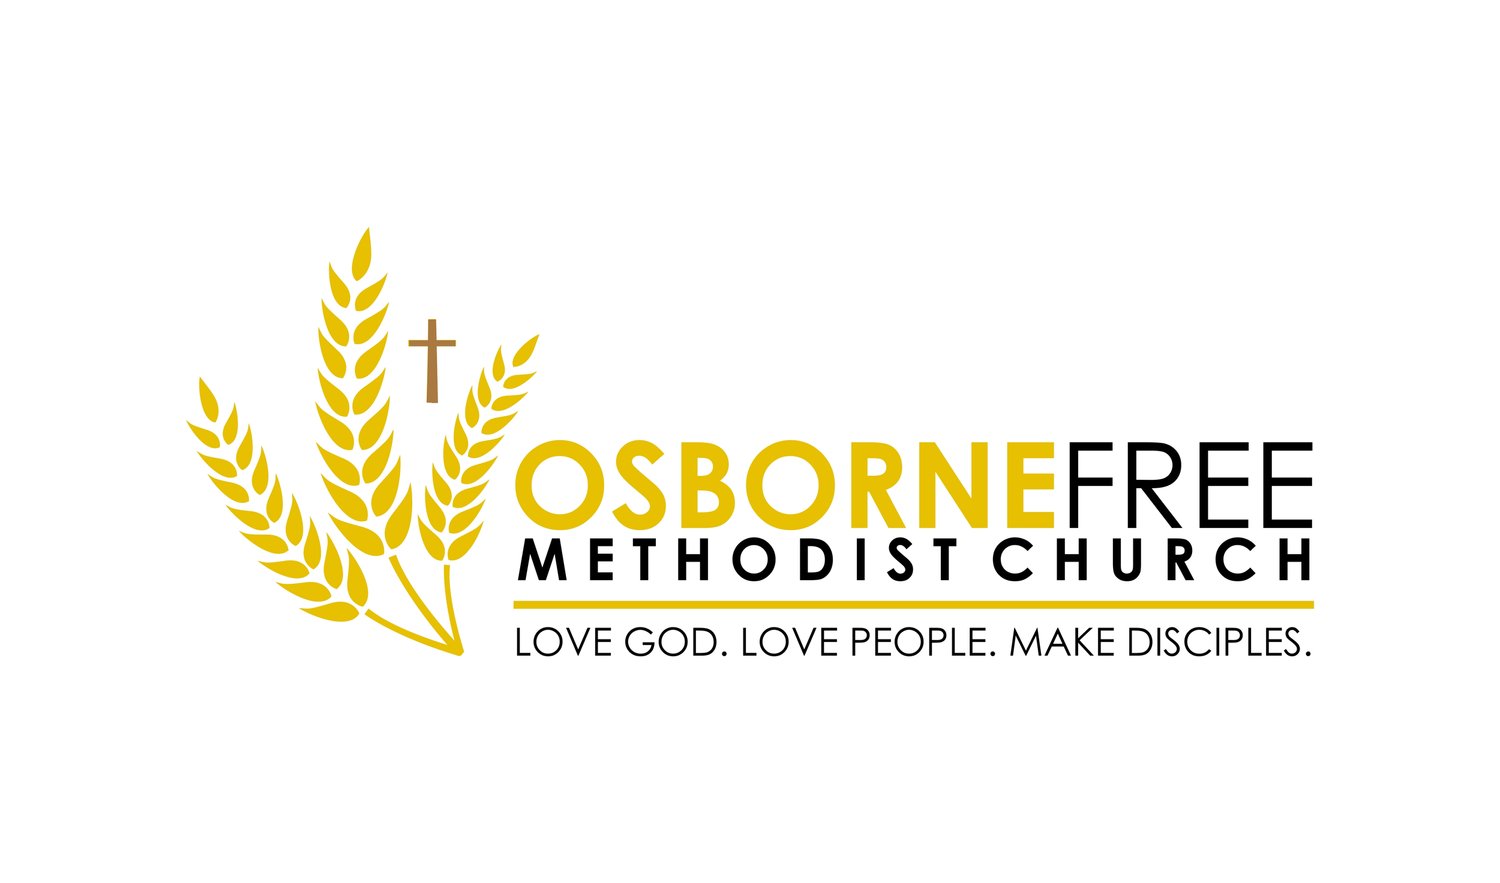 Osborne Free Methodist Church